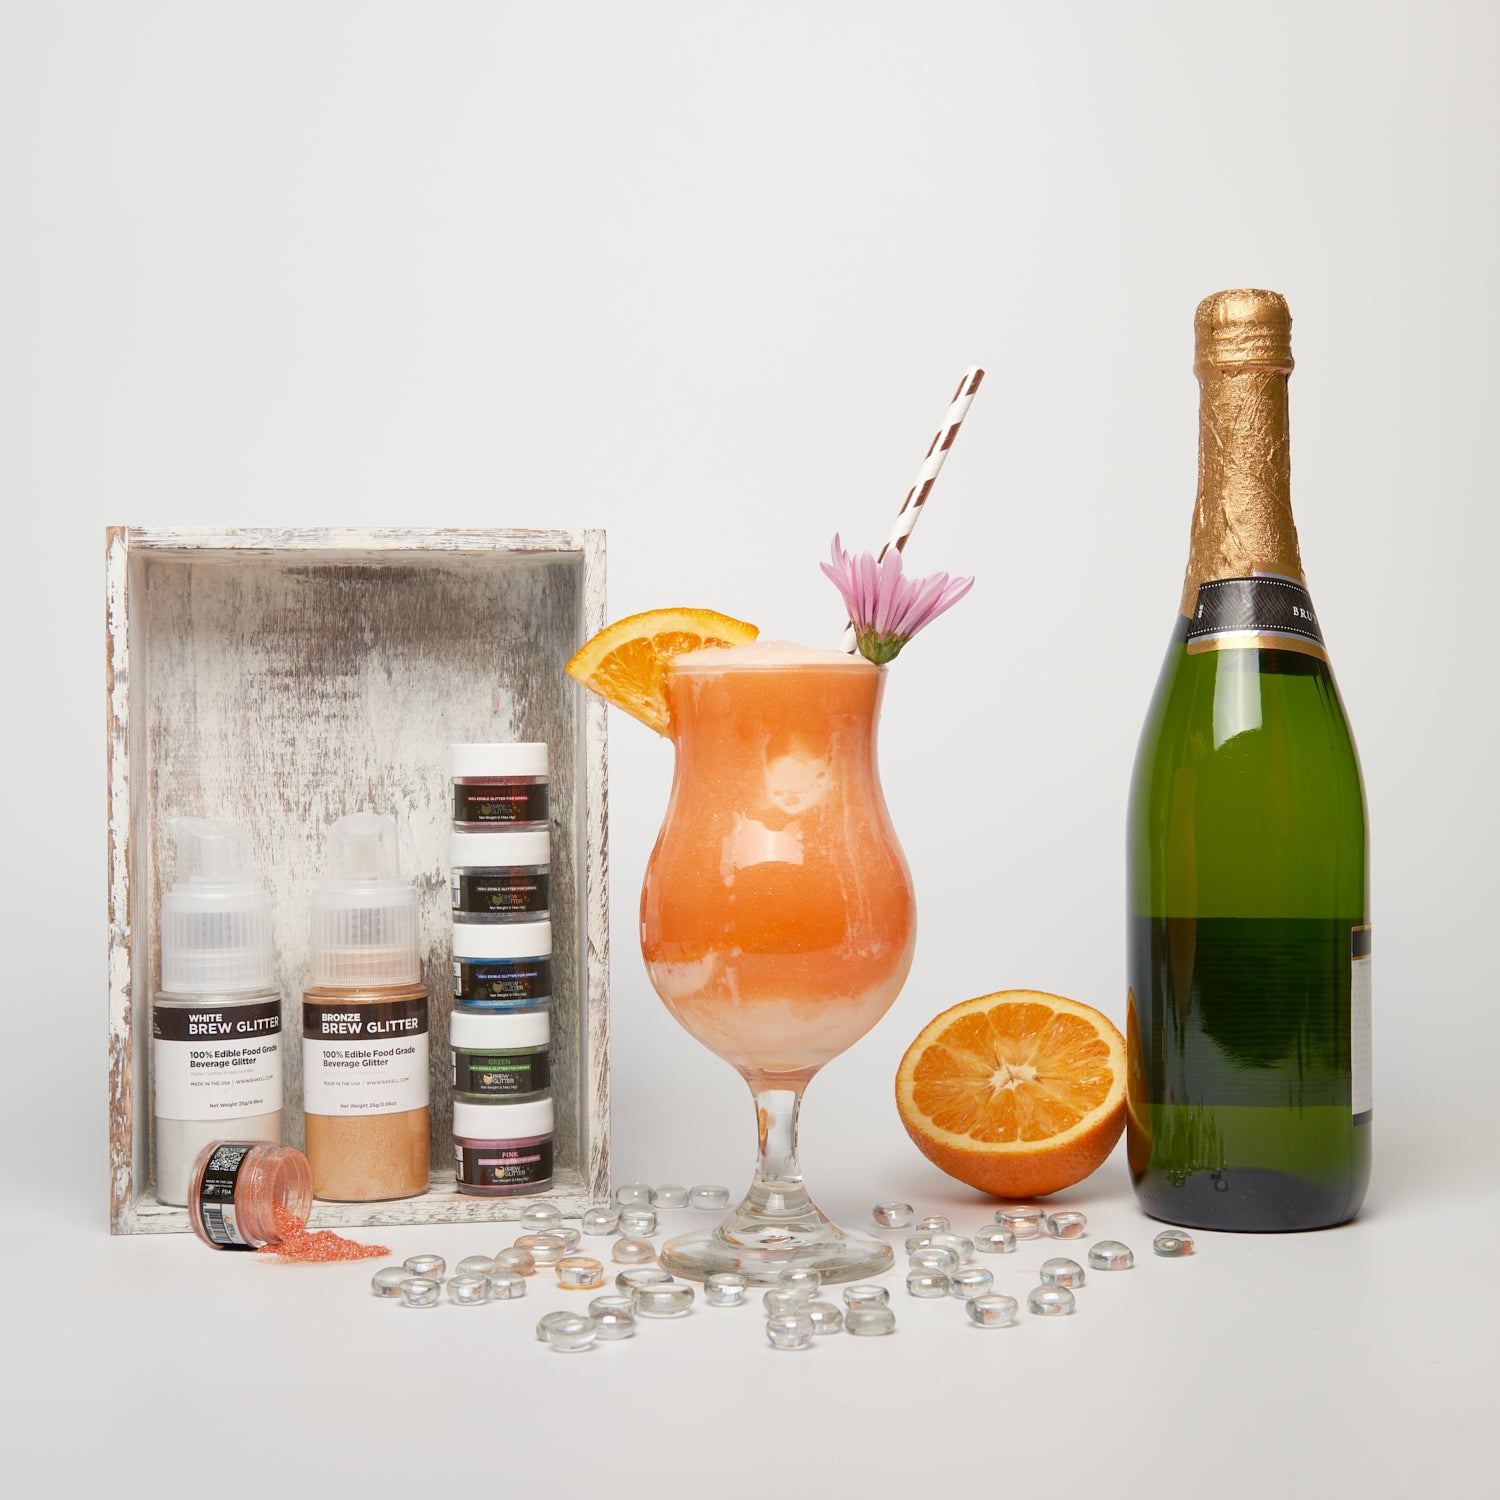 Peach Champagne Glittery Float using Orange Glitter